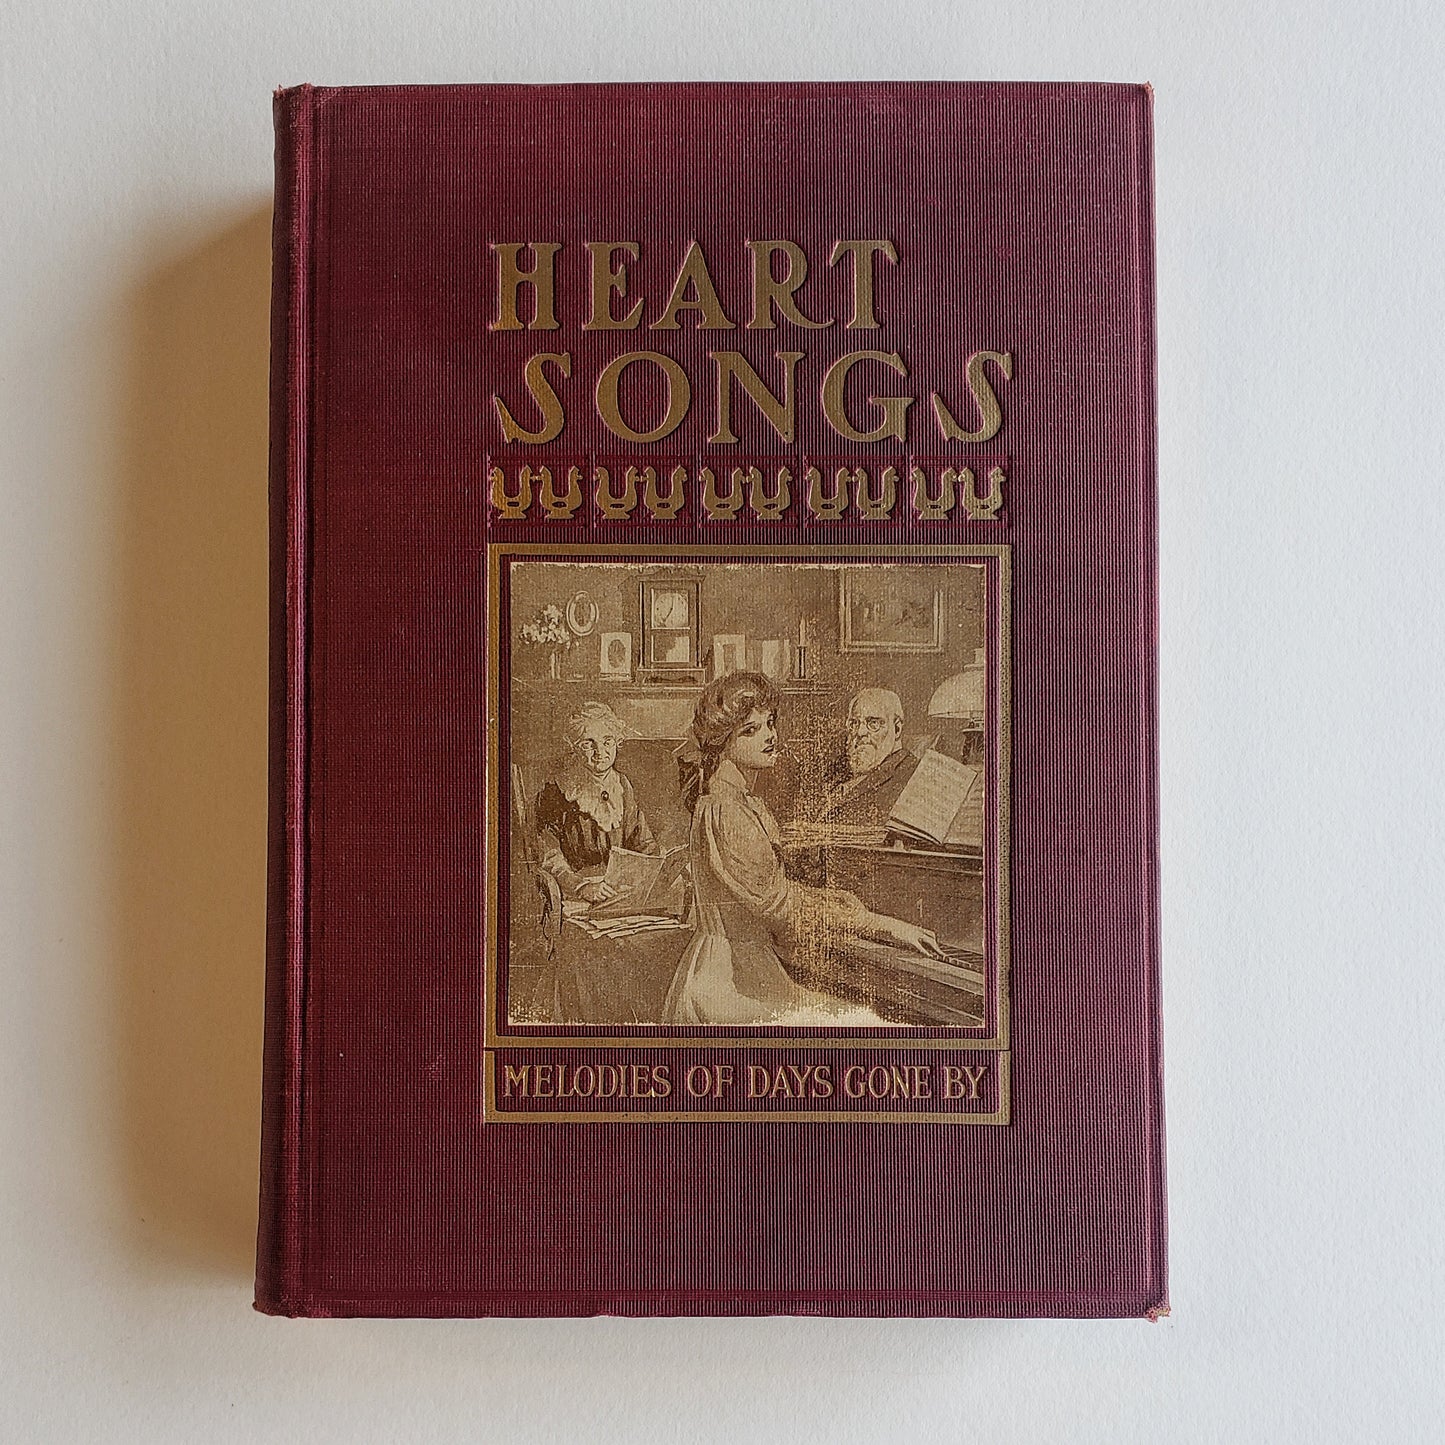 Vintage Book- Heart Songs (Music)